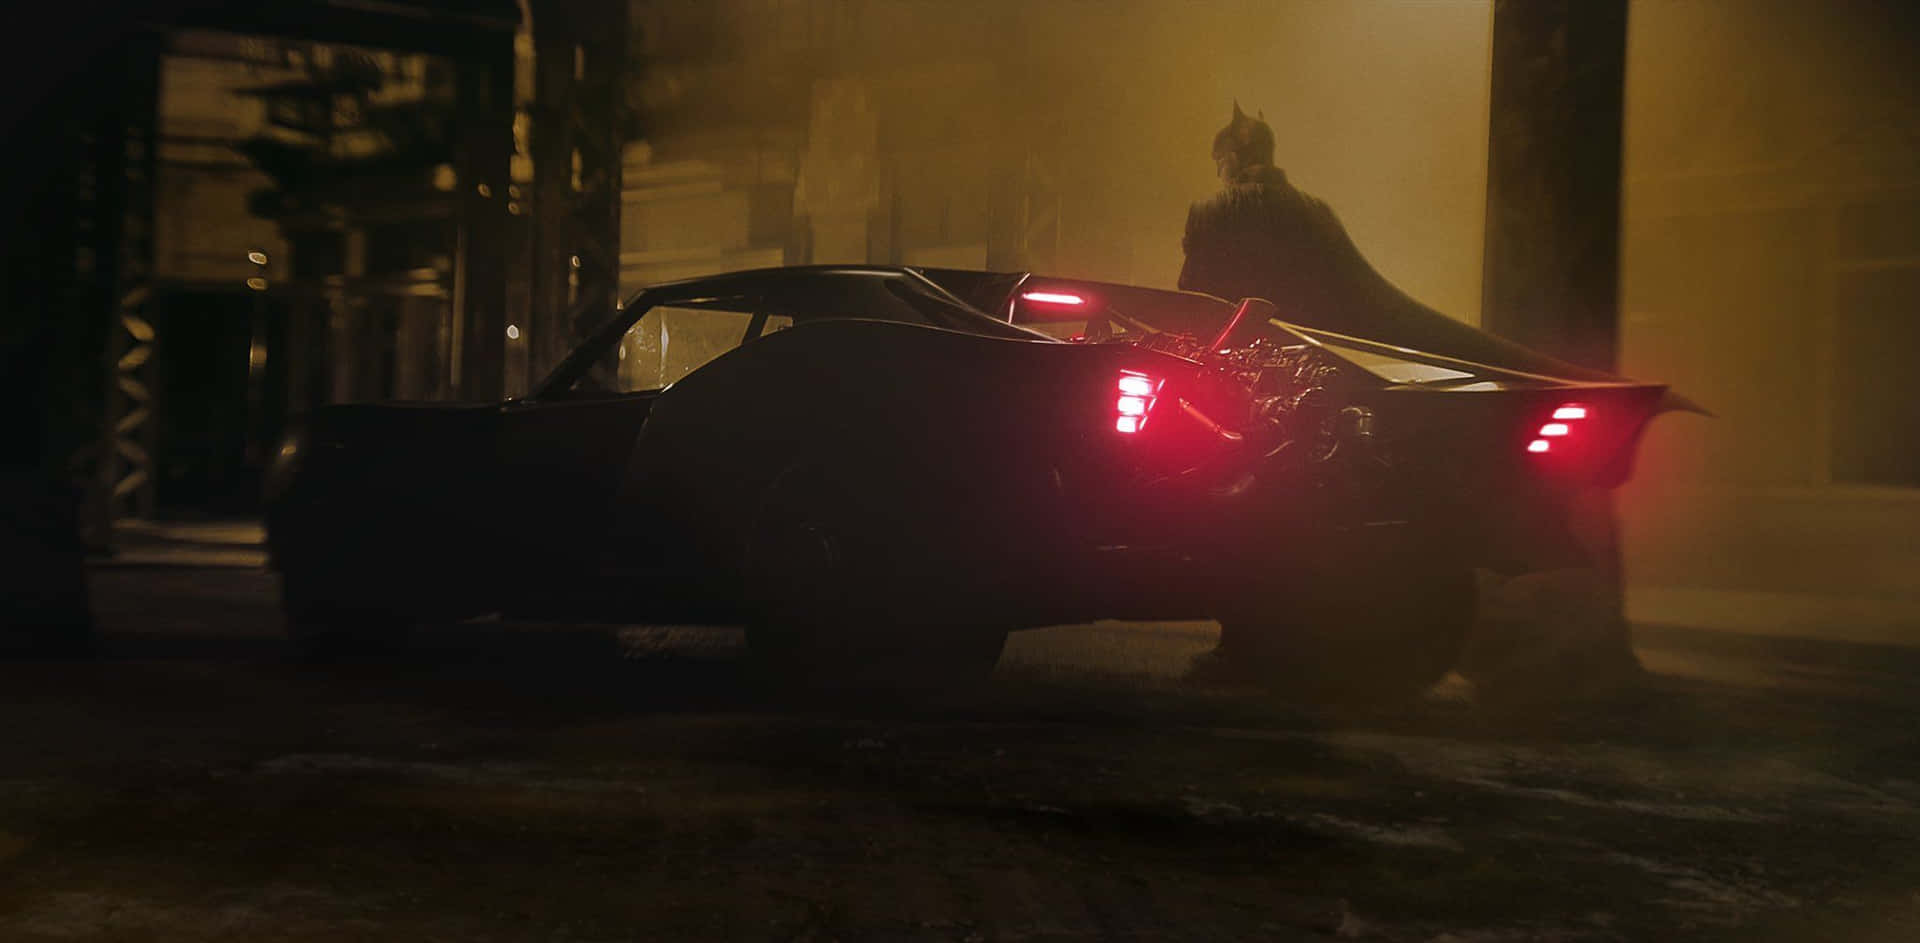 Batman Monster Car Red Tail Lights Background